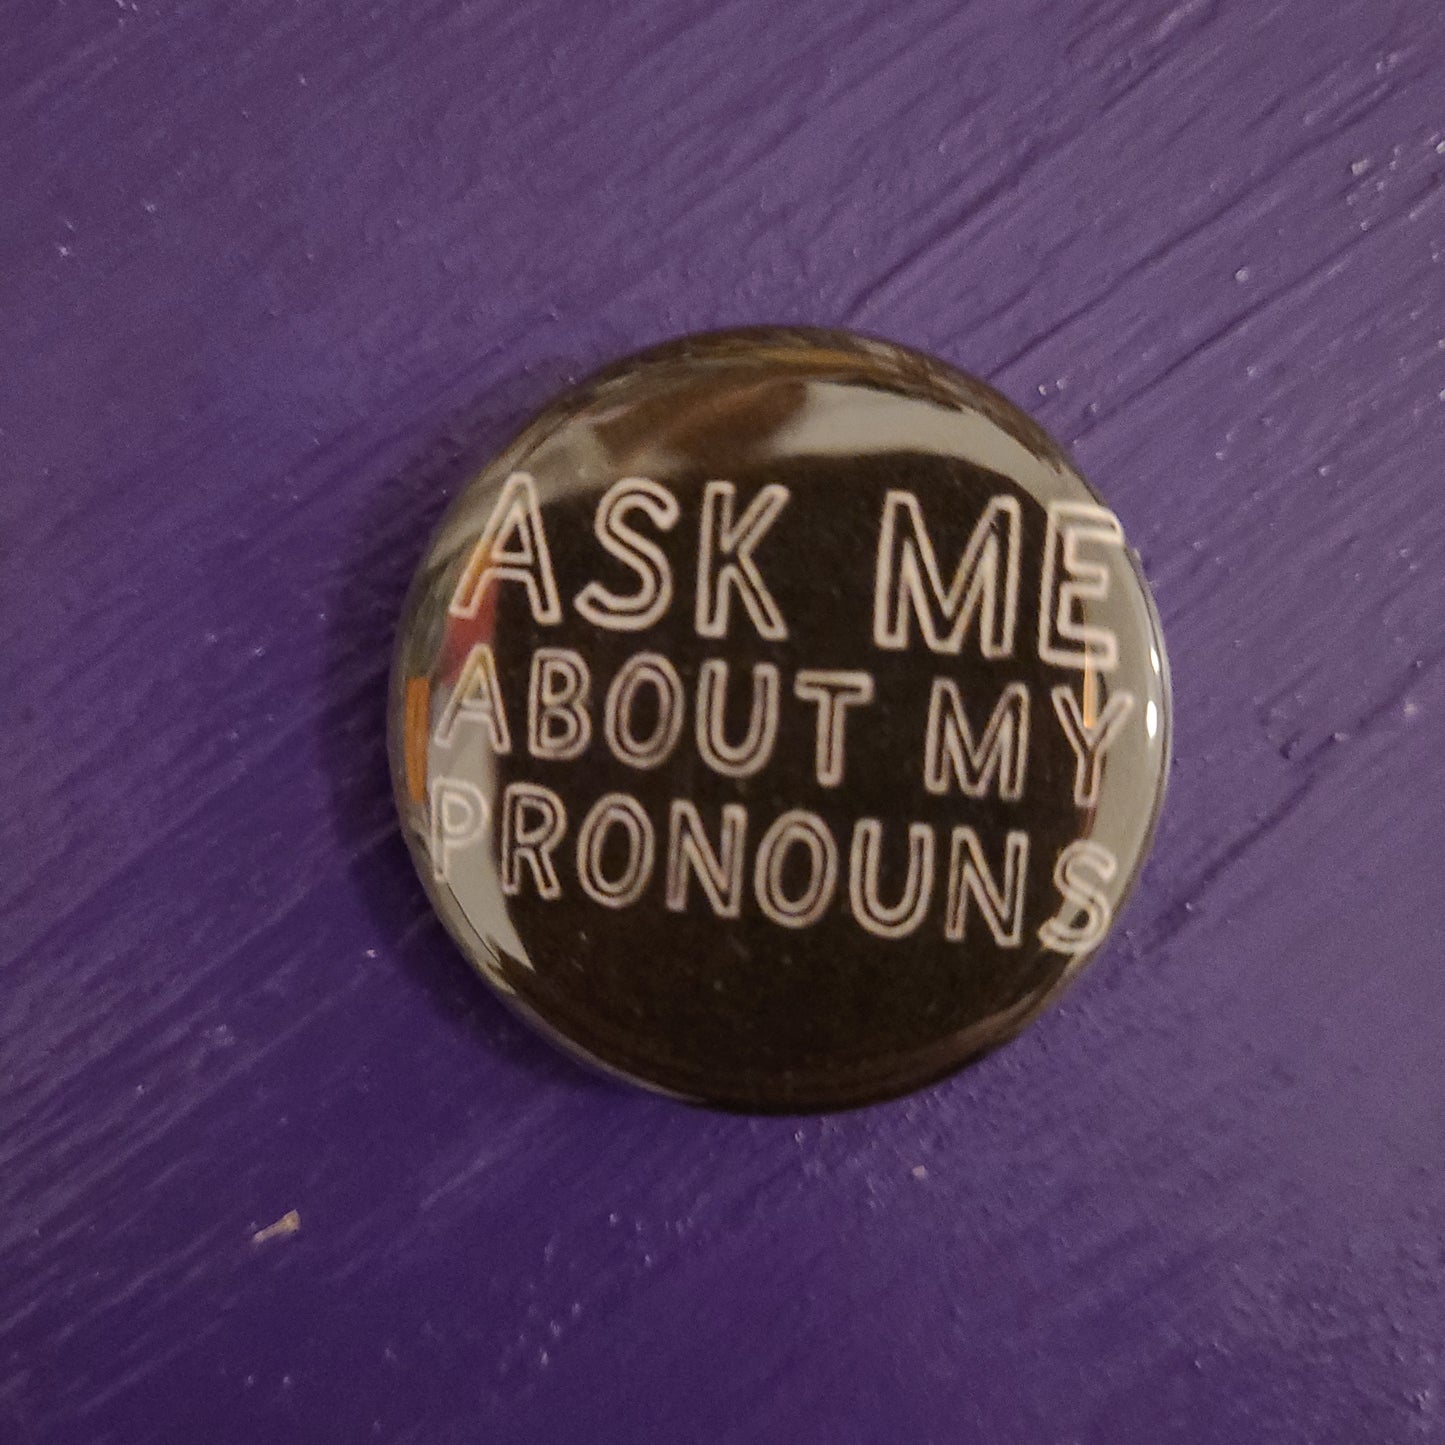 Pin - Ask me about my pronouns